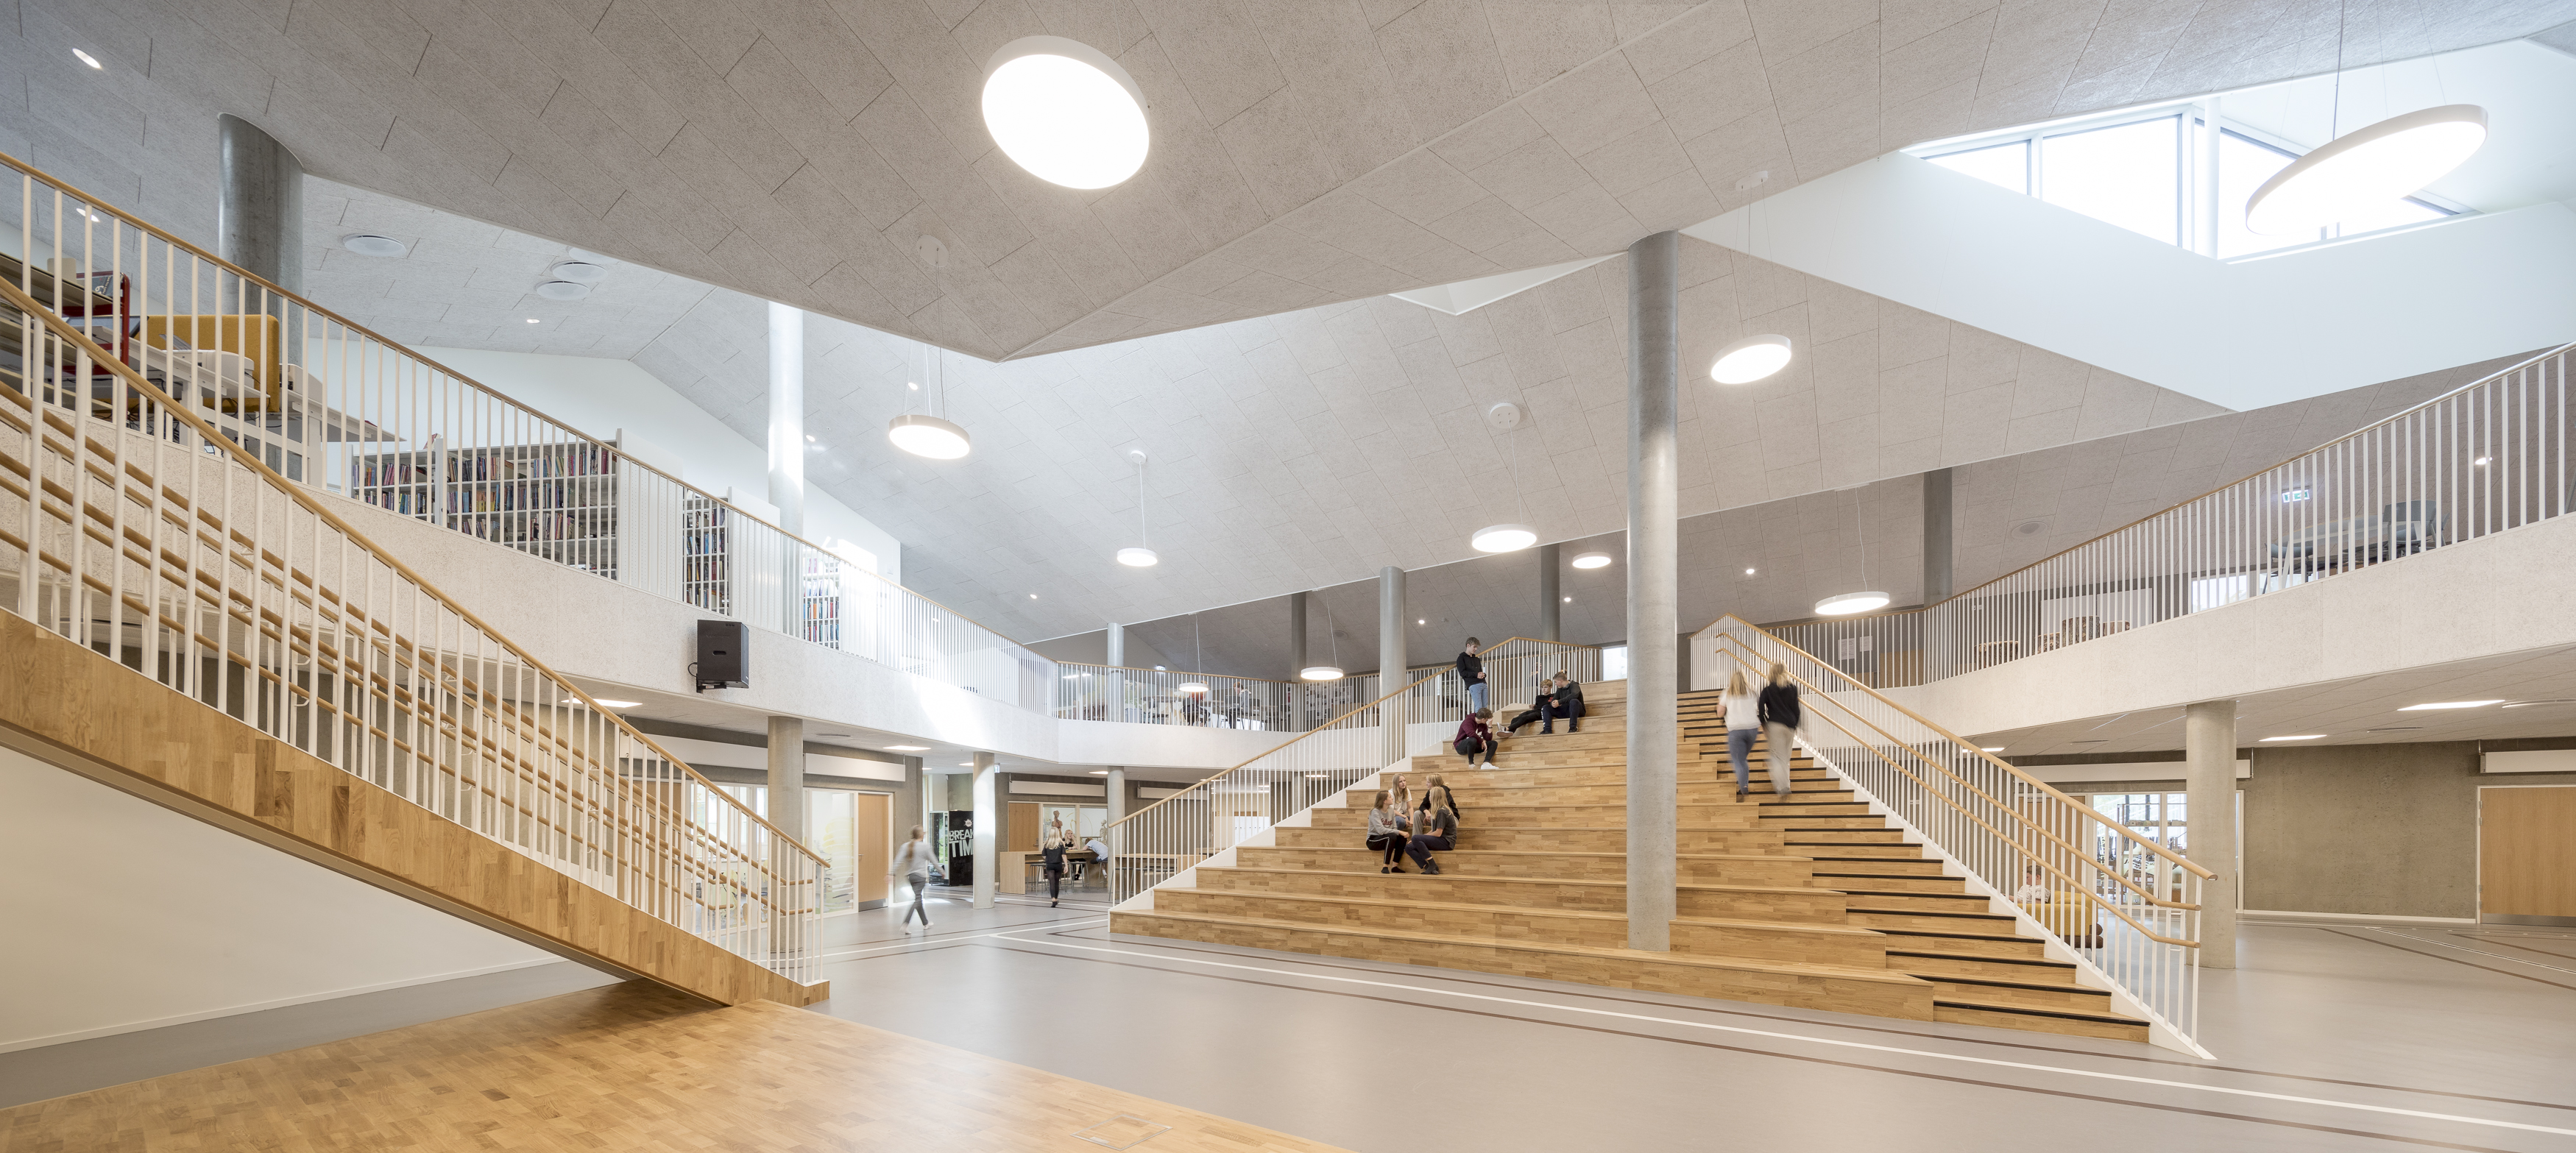 Photo of Skovbakke School by CEBRA Architecture. Photo credit: Adam Mørk